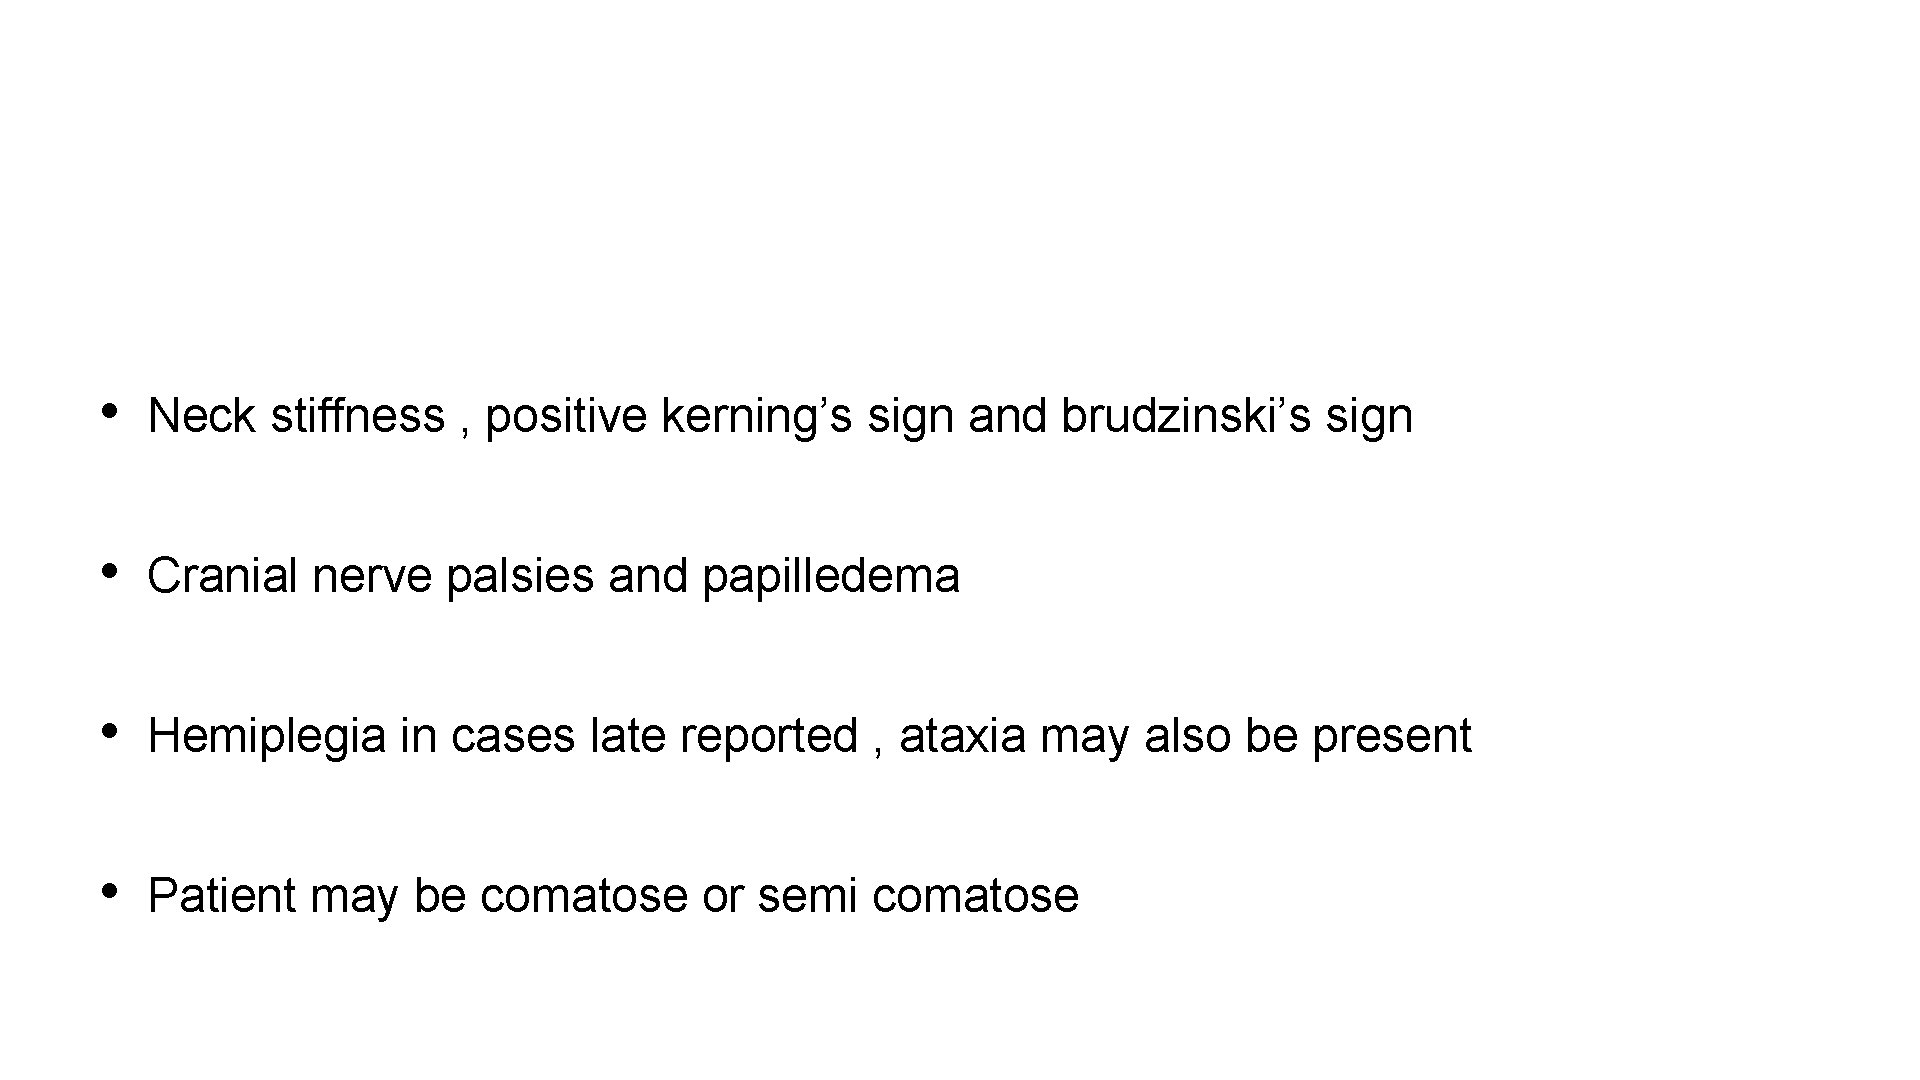  • Neck stiffness , positive kerning’s sign and brudzinski’s sign • Cranial nerve